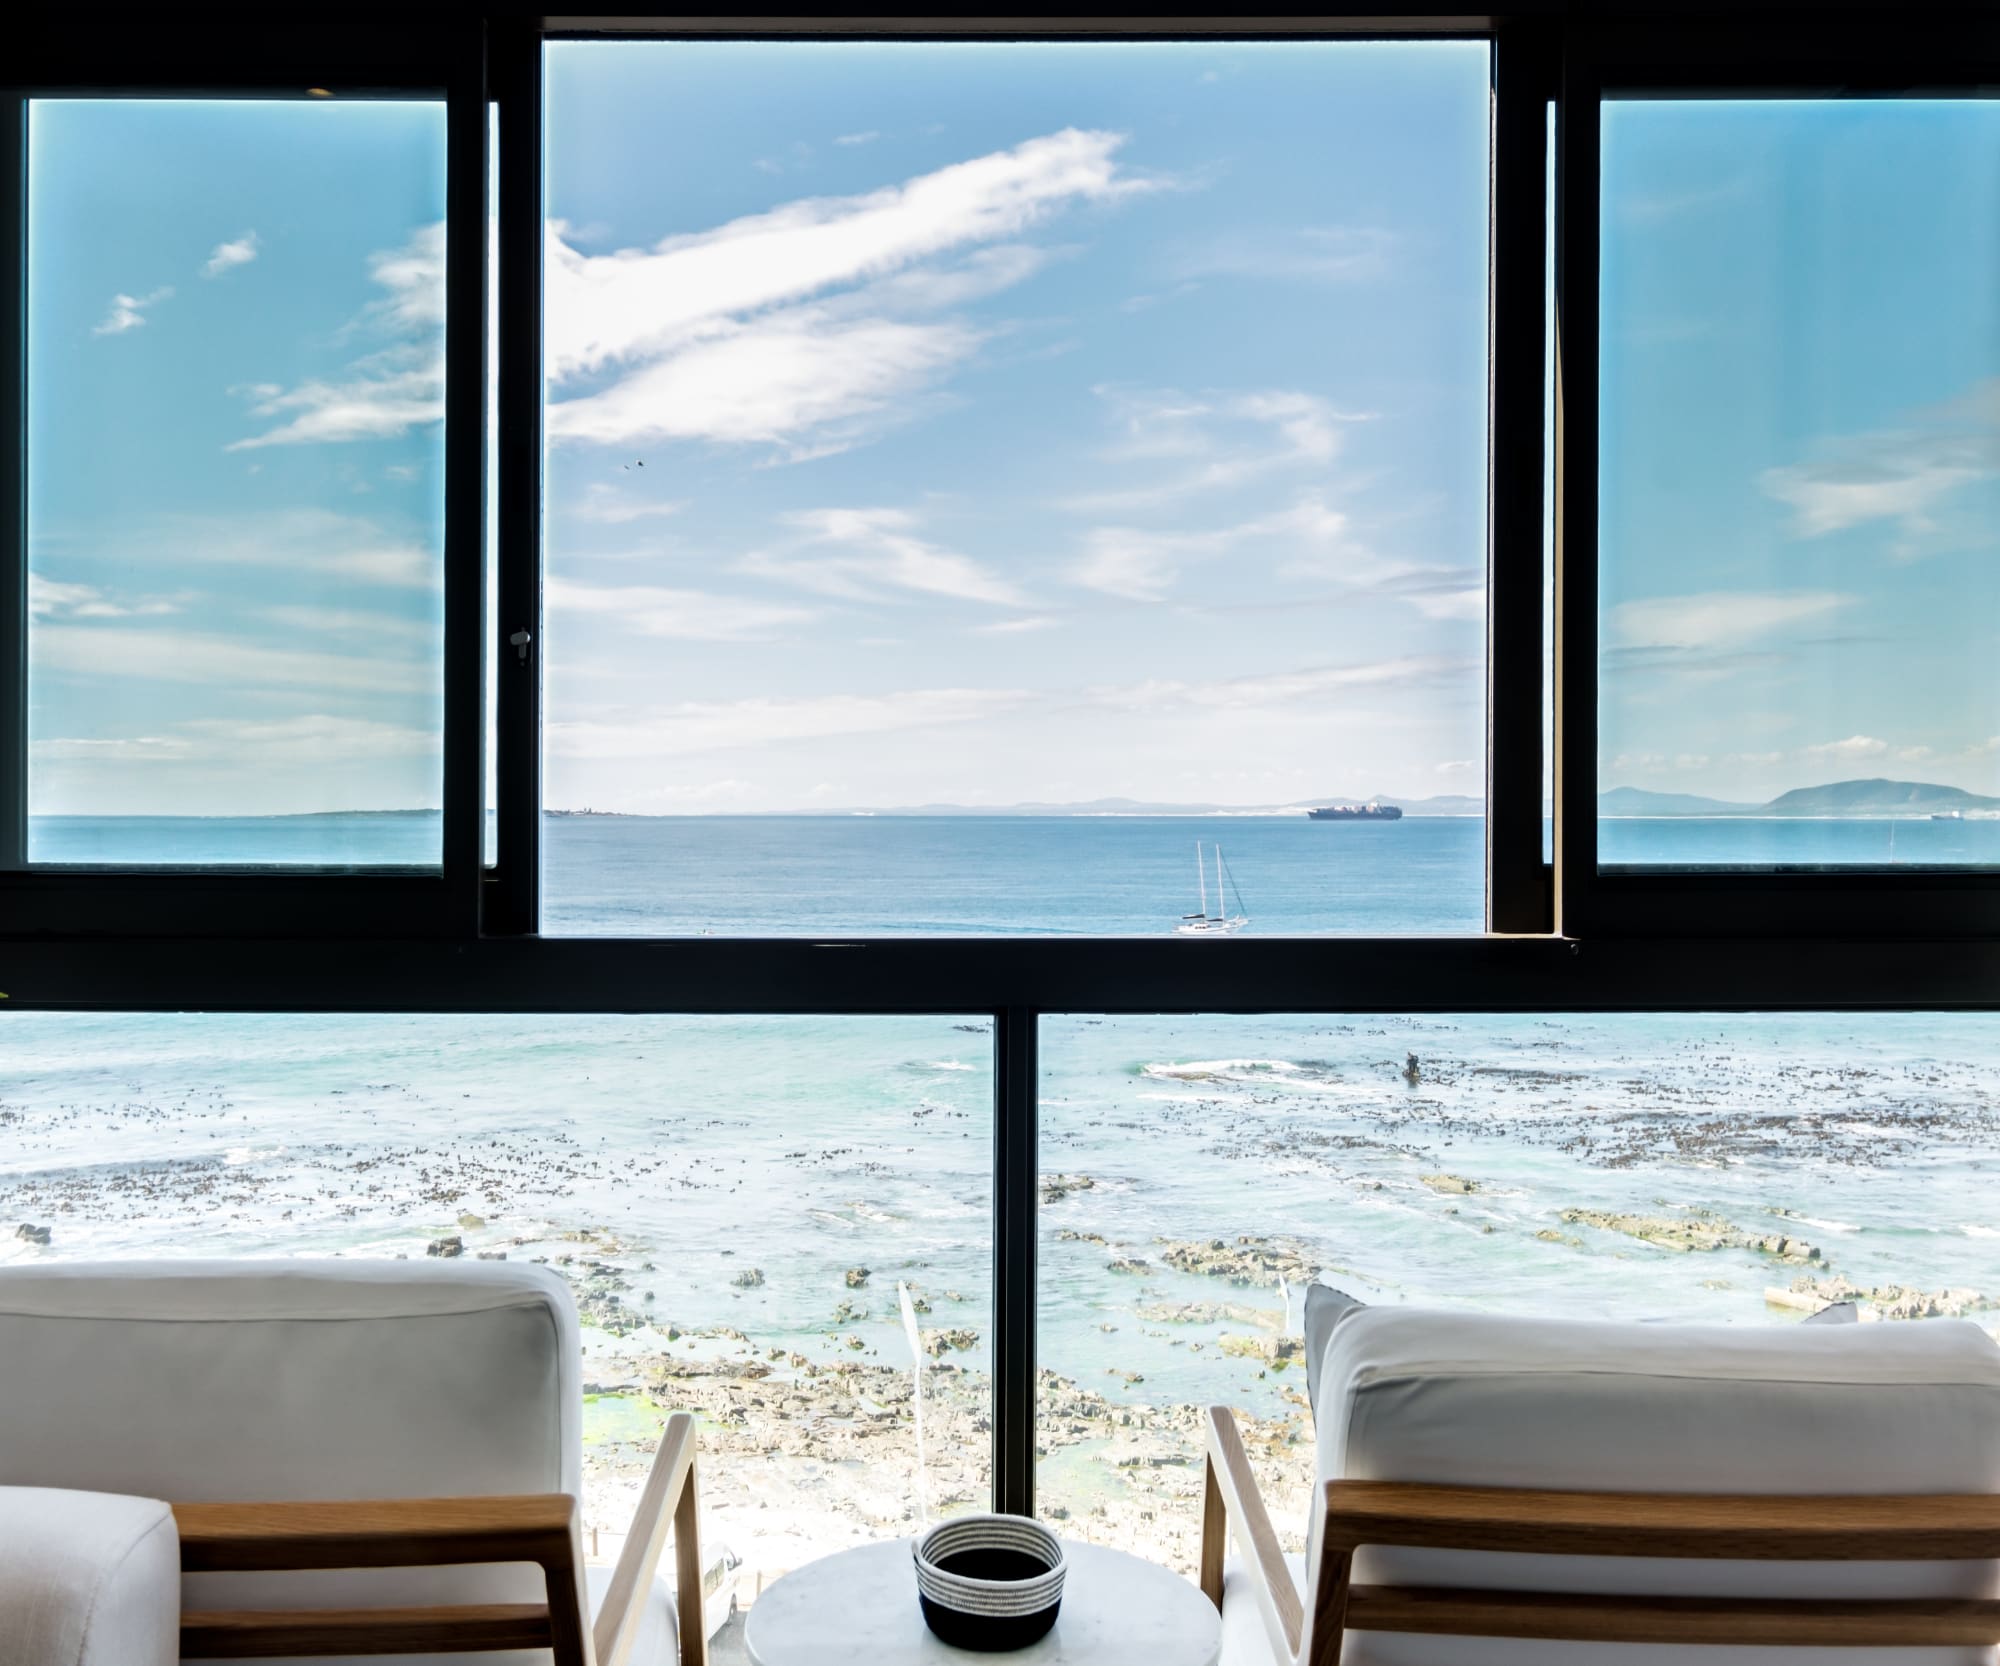 Magical Apartment w Uninterrupted Ocean Views Mouille Views Photo